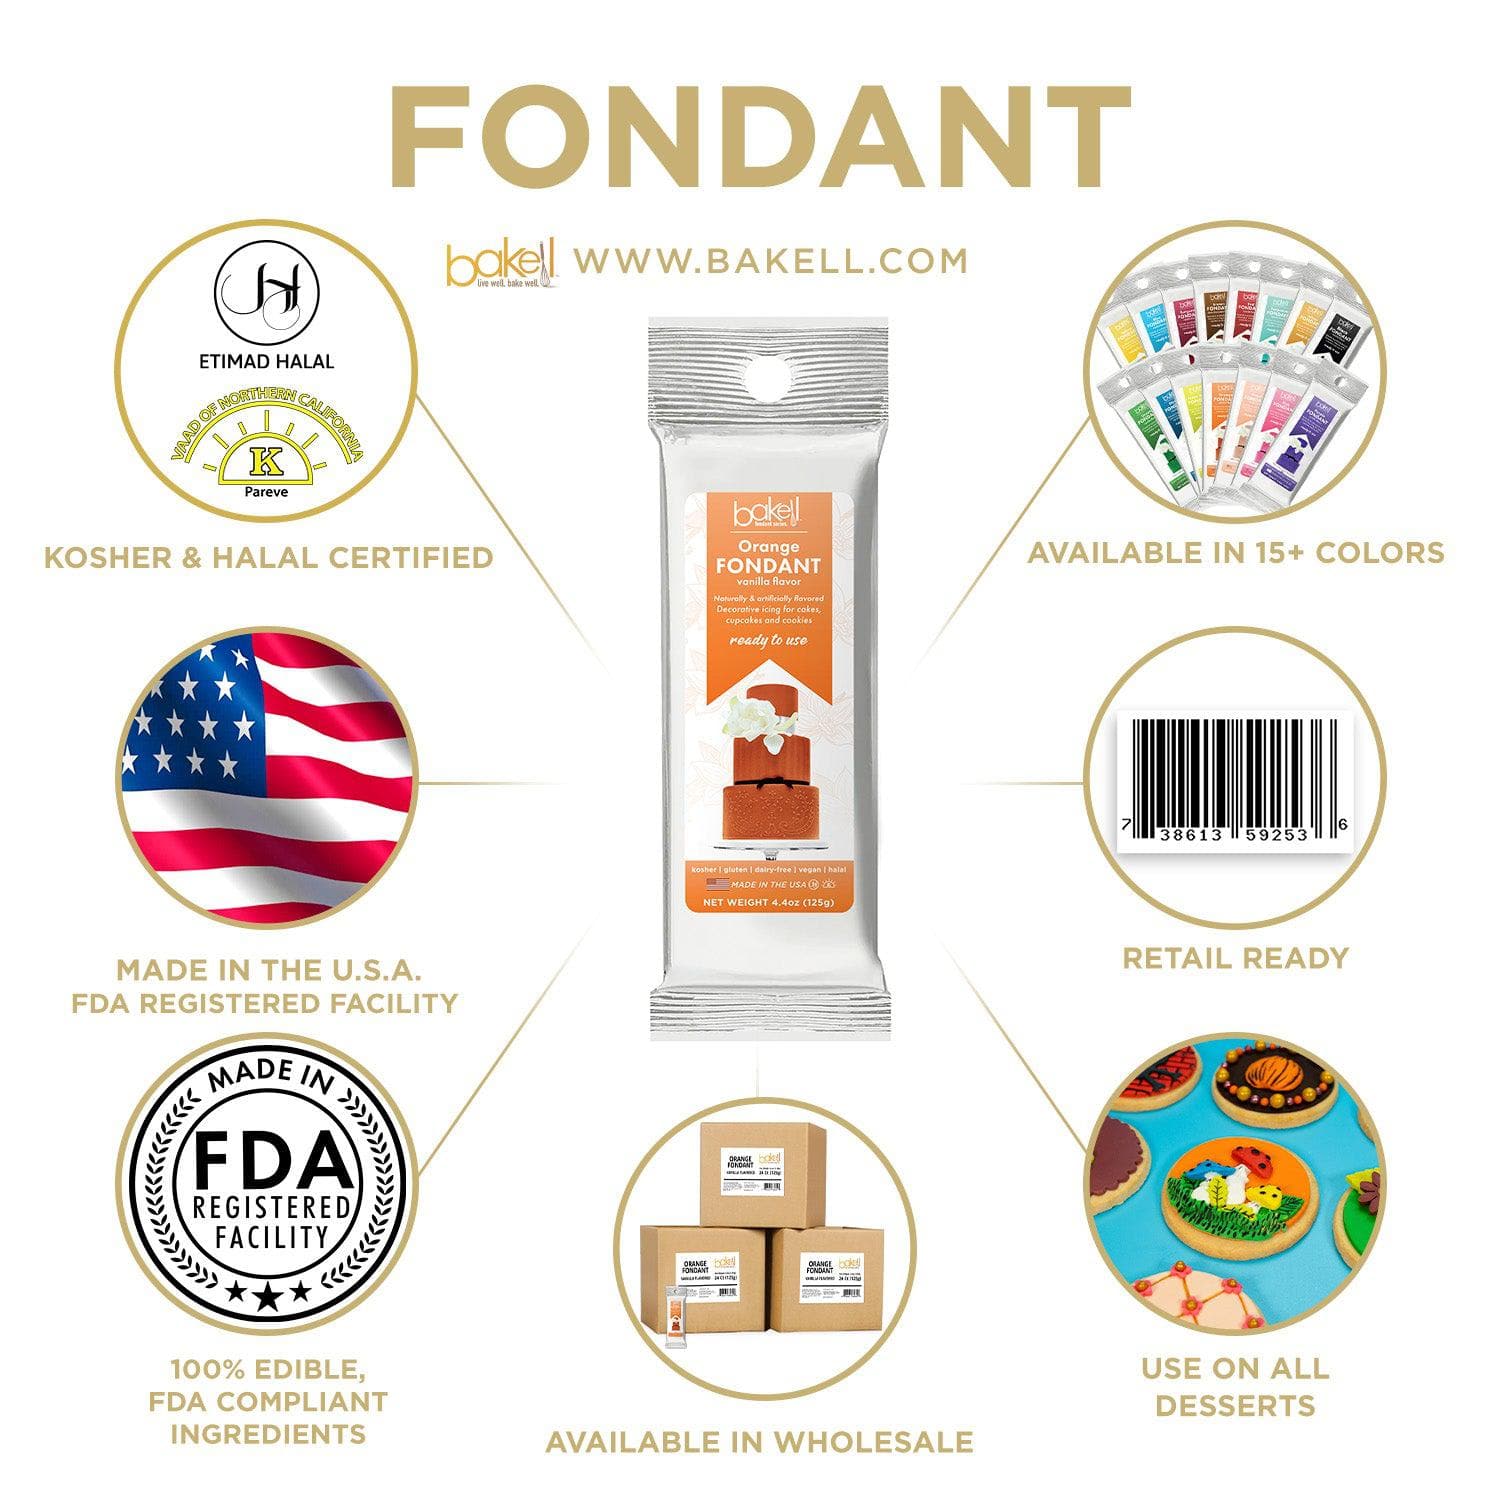 Buy Orange Vanilla Fondant 4oz - Best Tasting - Bakell